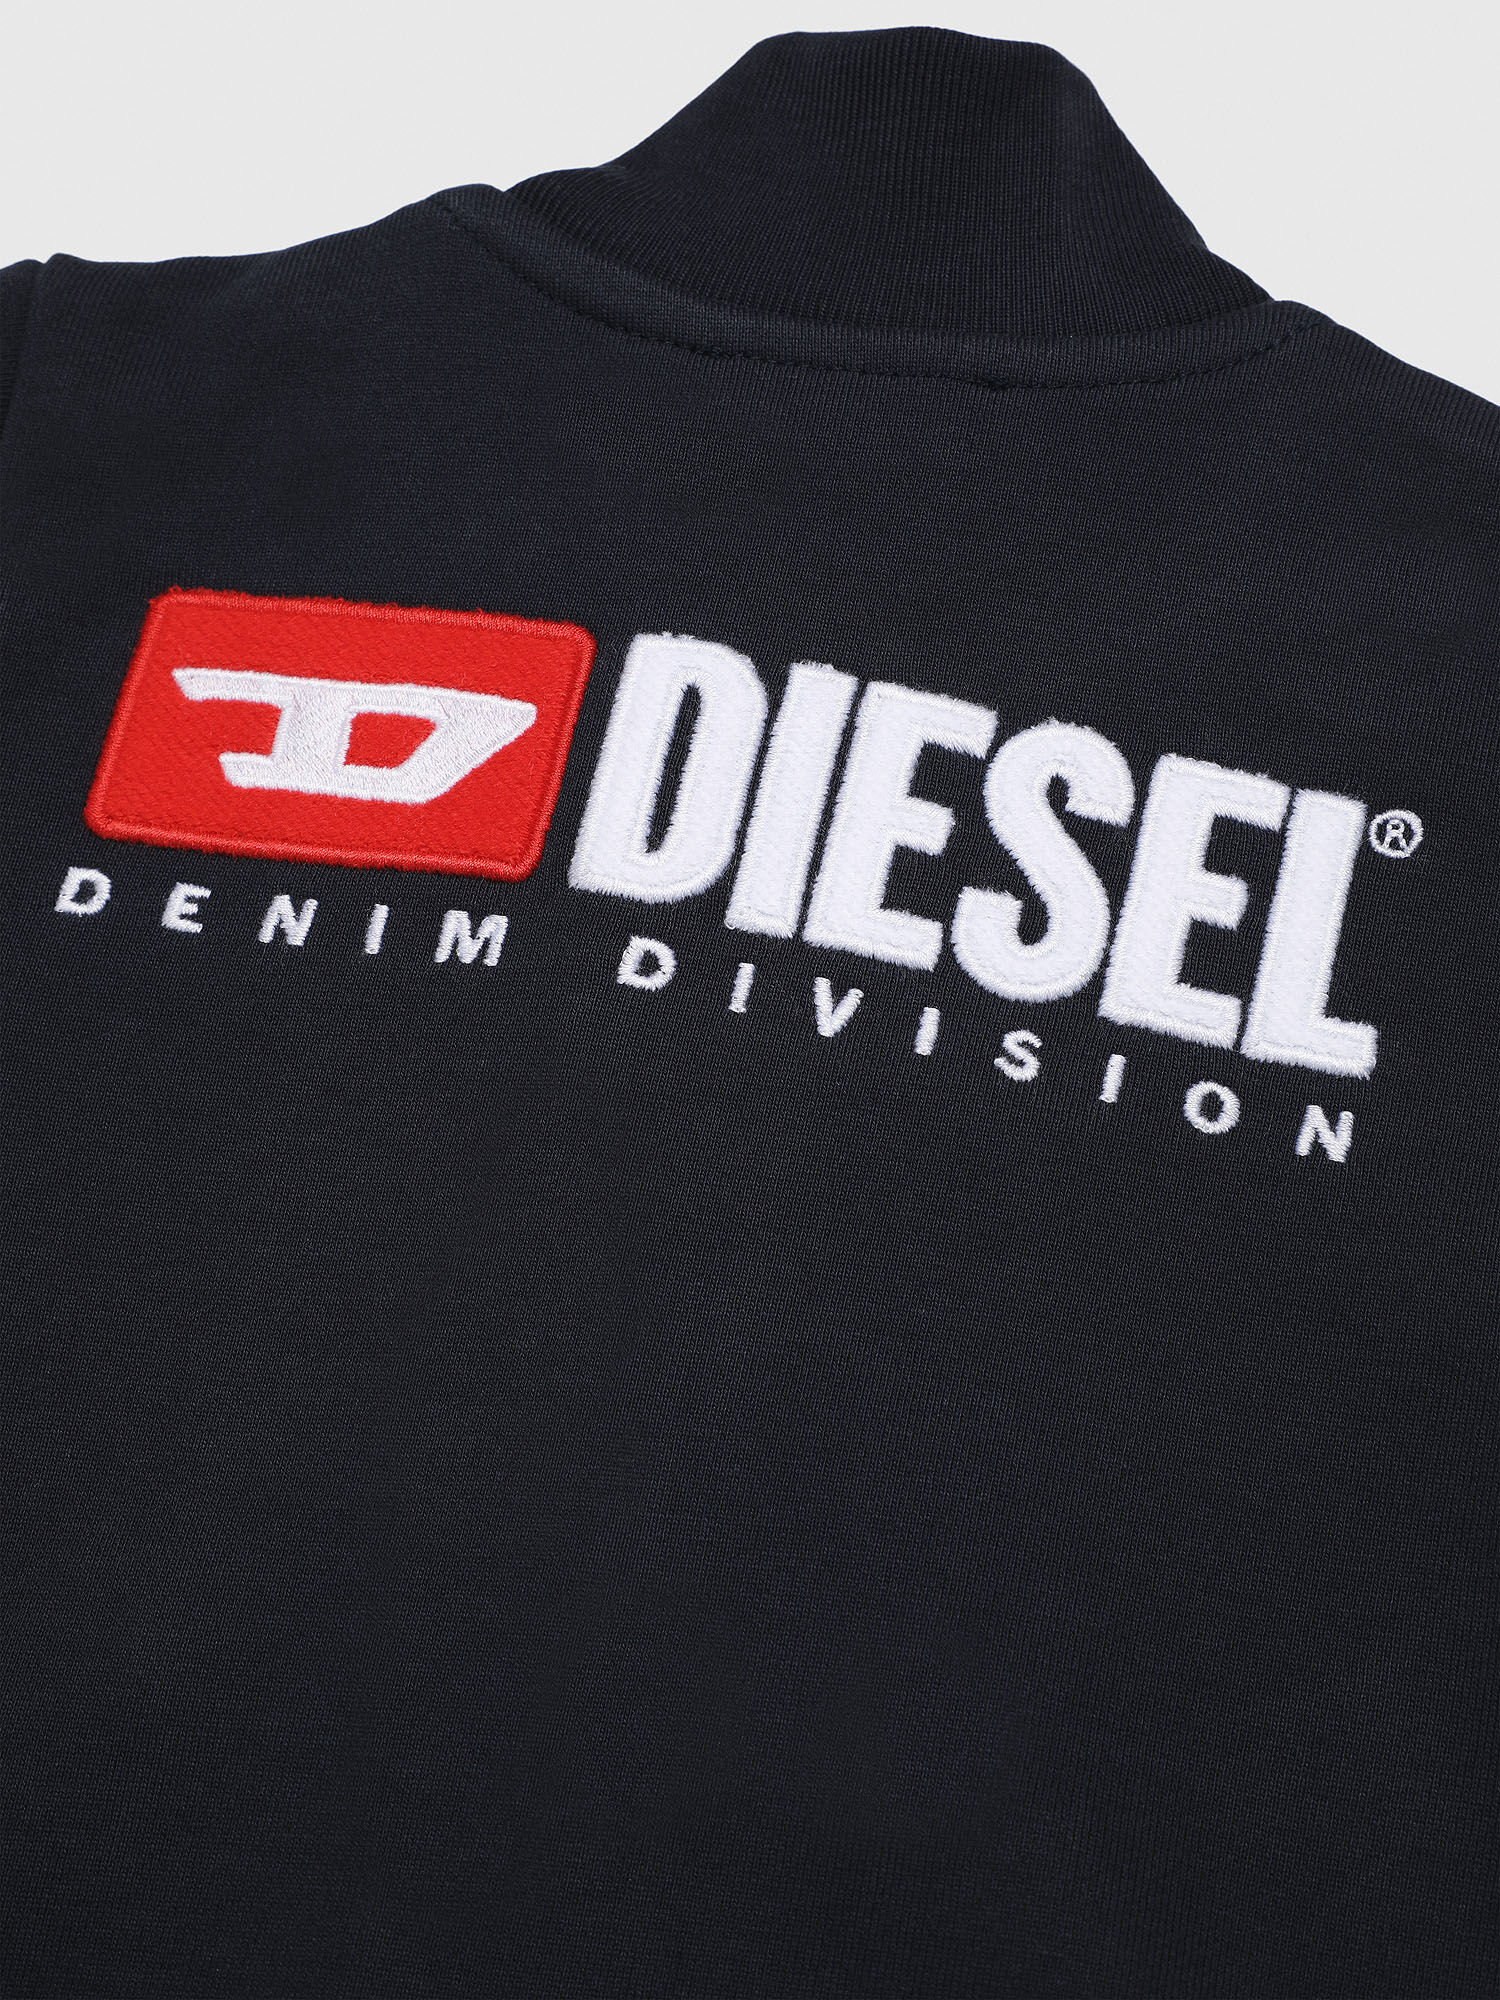 denim division diesel